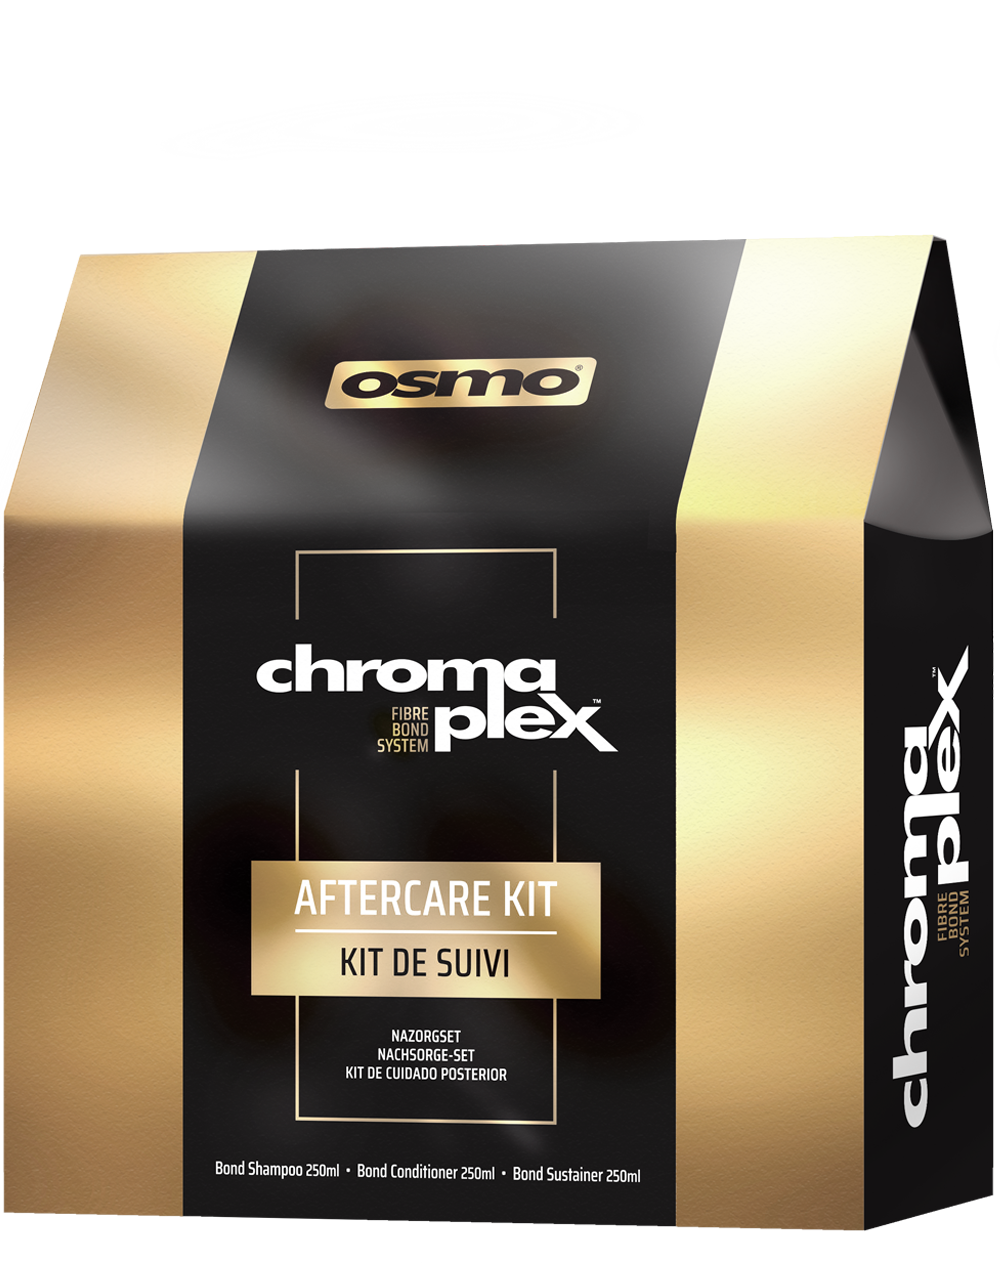 New OSMO CHROMAPLEX™ AFTERCARE KIT